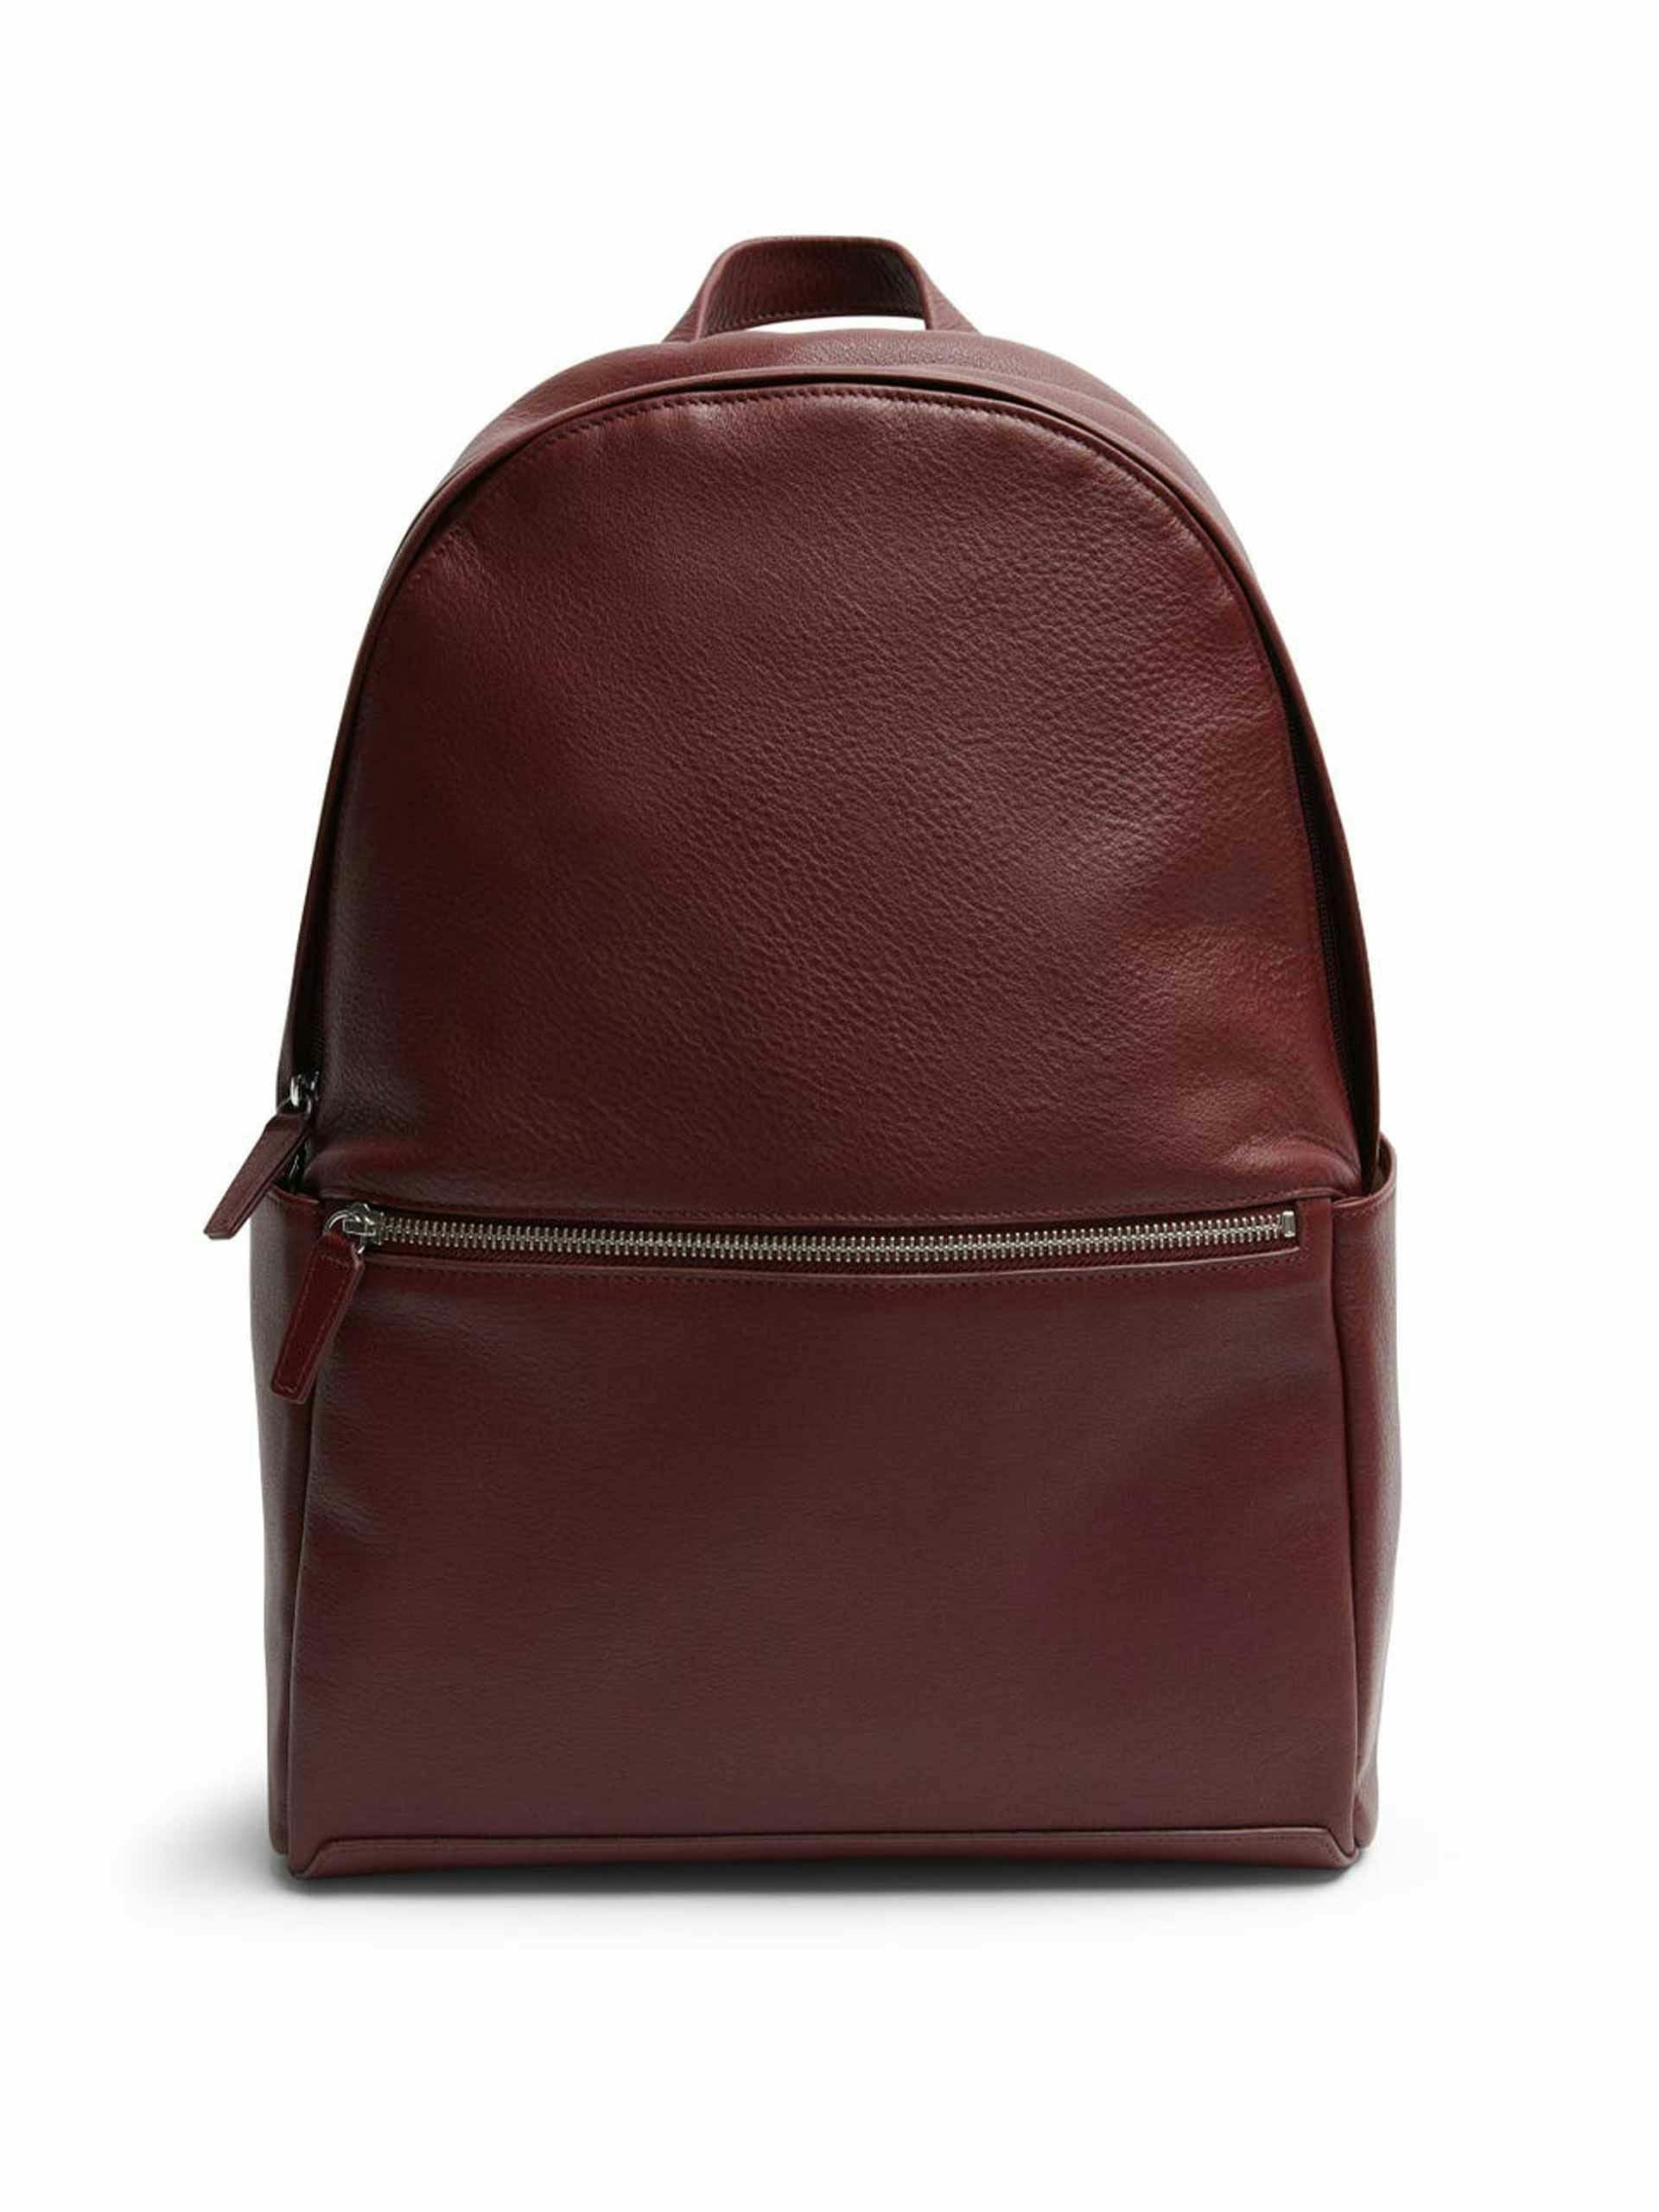 Burgundy leather backpack